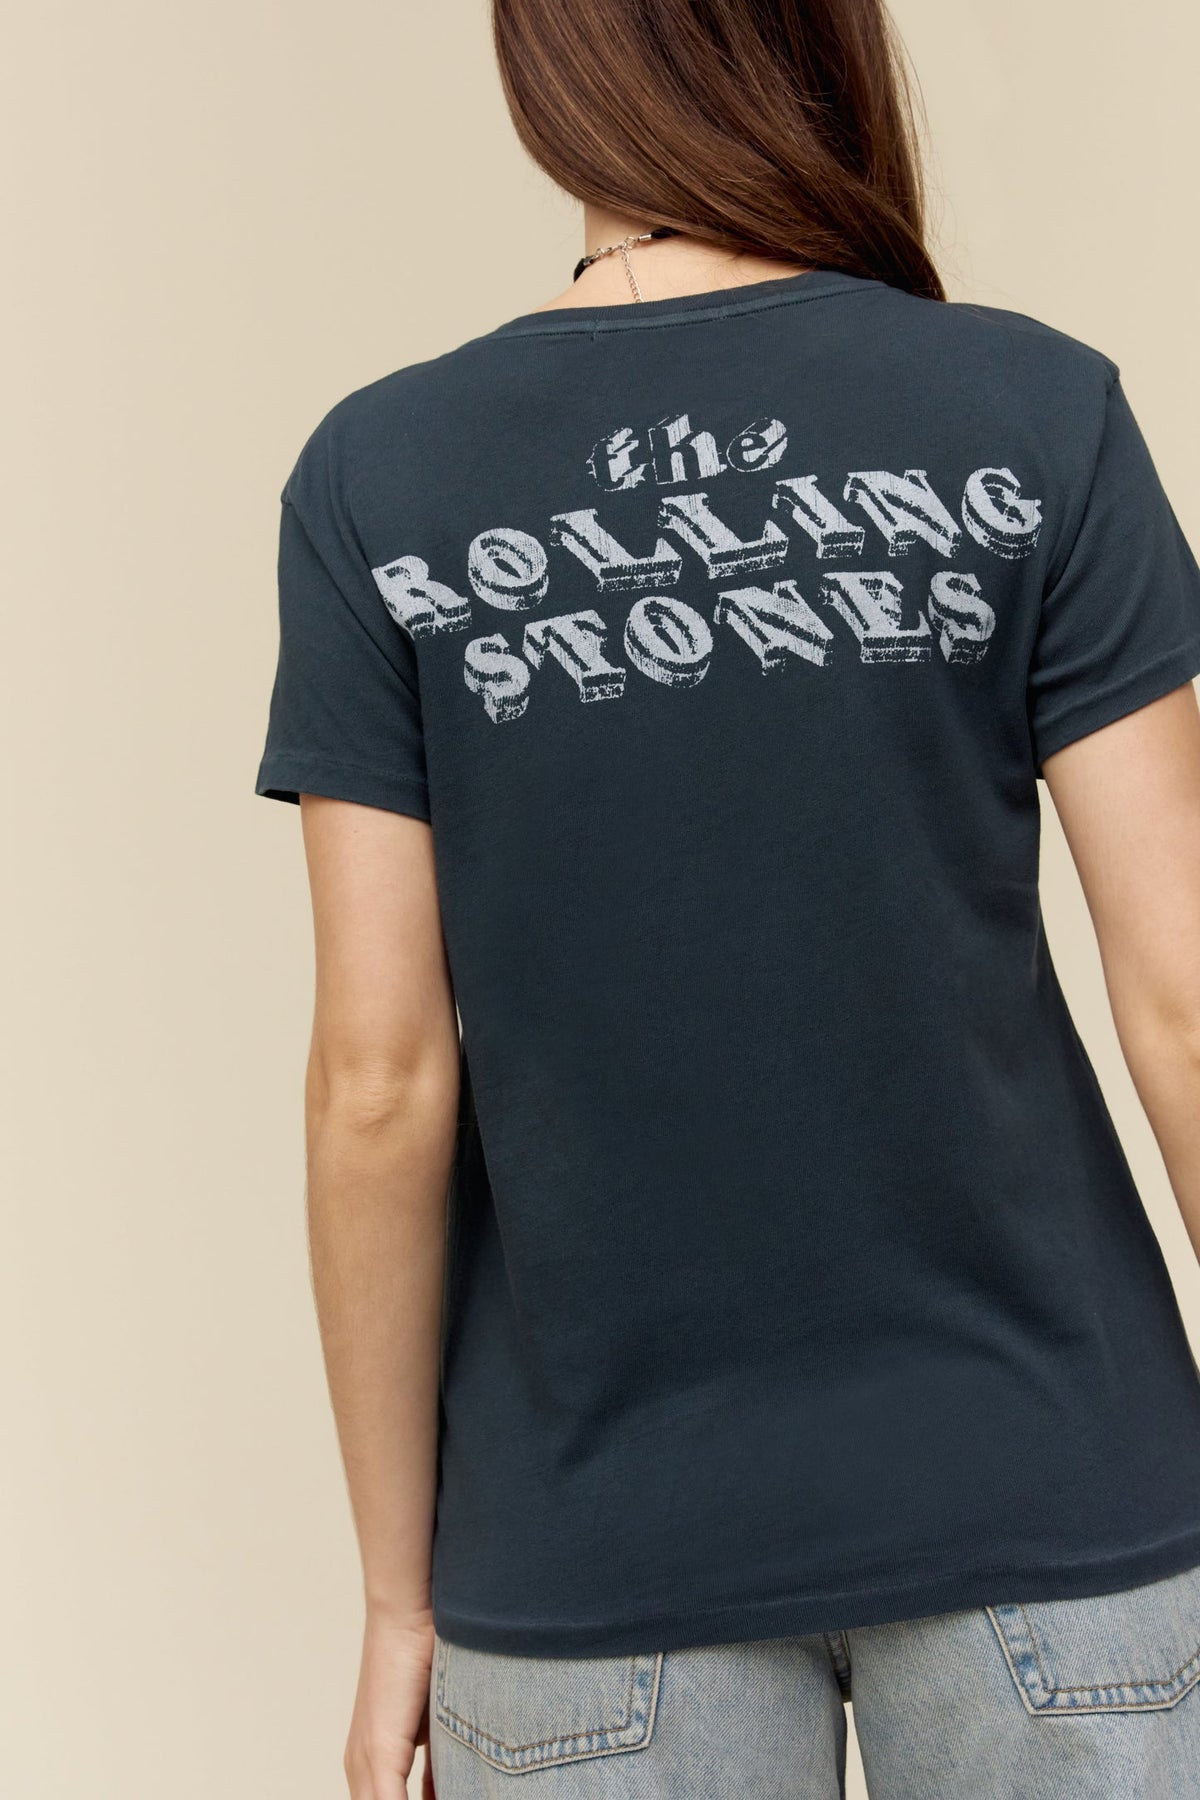 – Mint Rolling Fill Stones T Tour Market Graphic Ticket Tongue Shirt